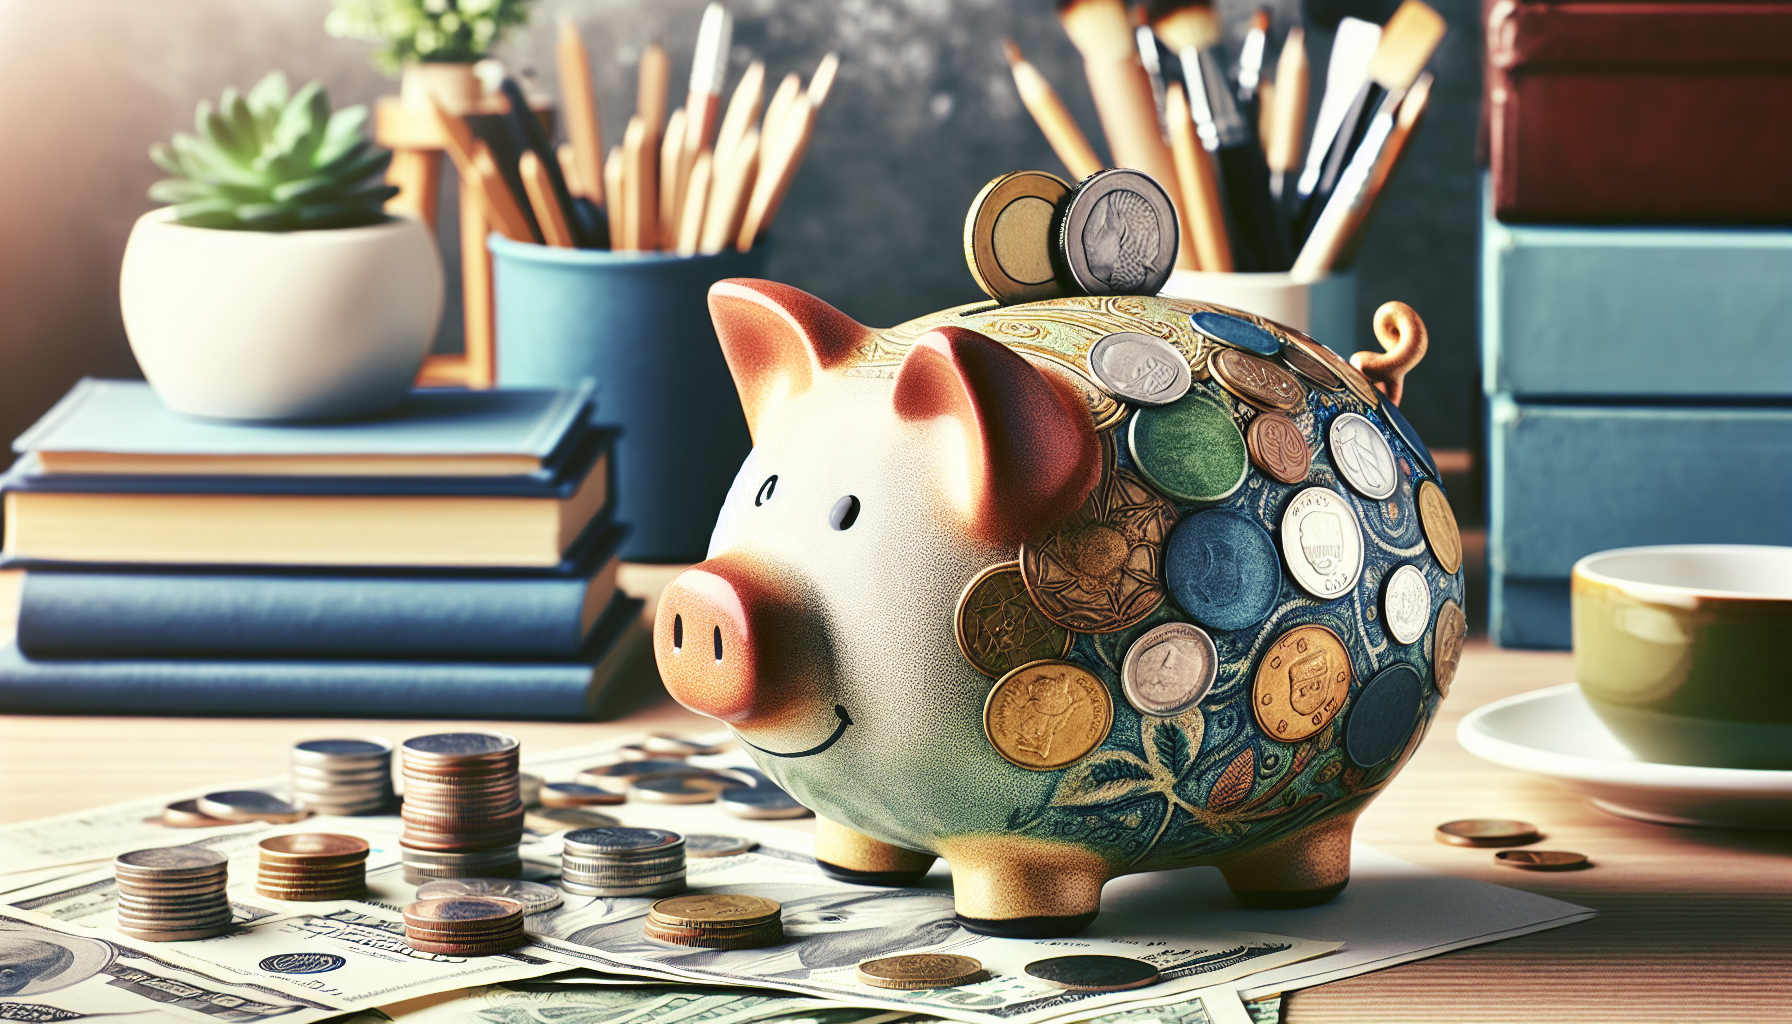 Financial Wellness For Families: Teaching Kids Smart Money Habits